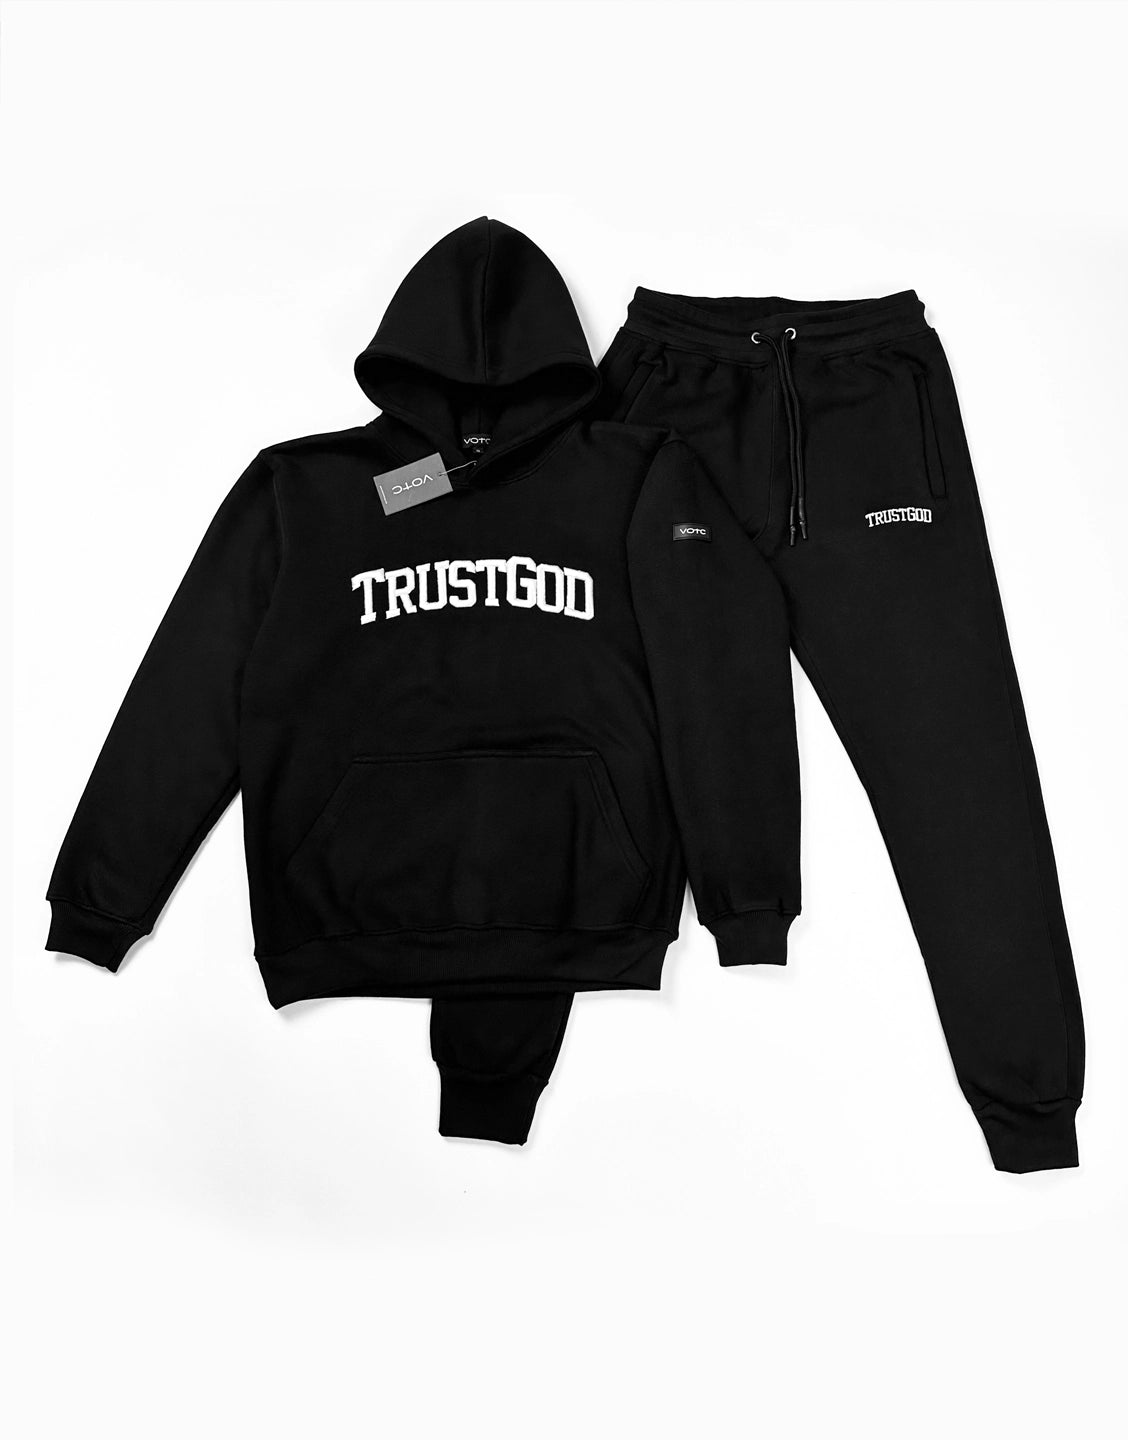 TRUST GOD JOGGER SET (Black) - VOTC Clothing